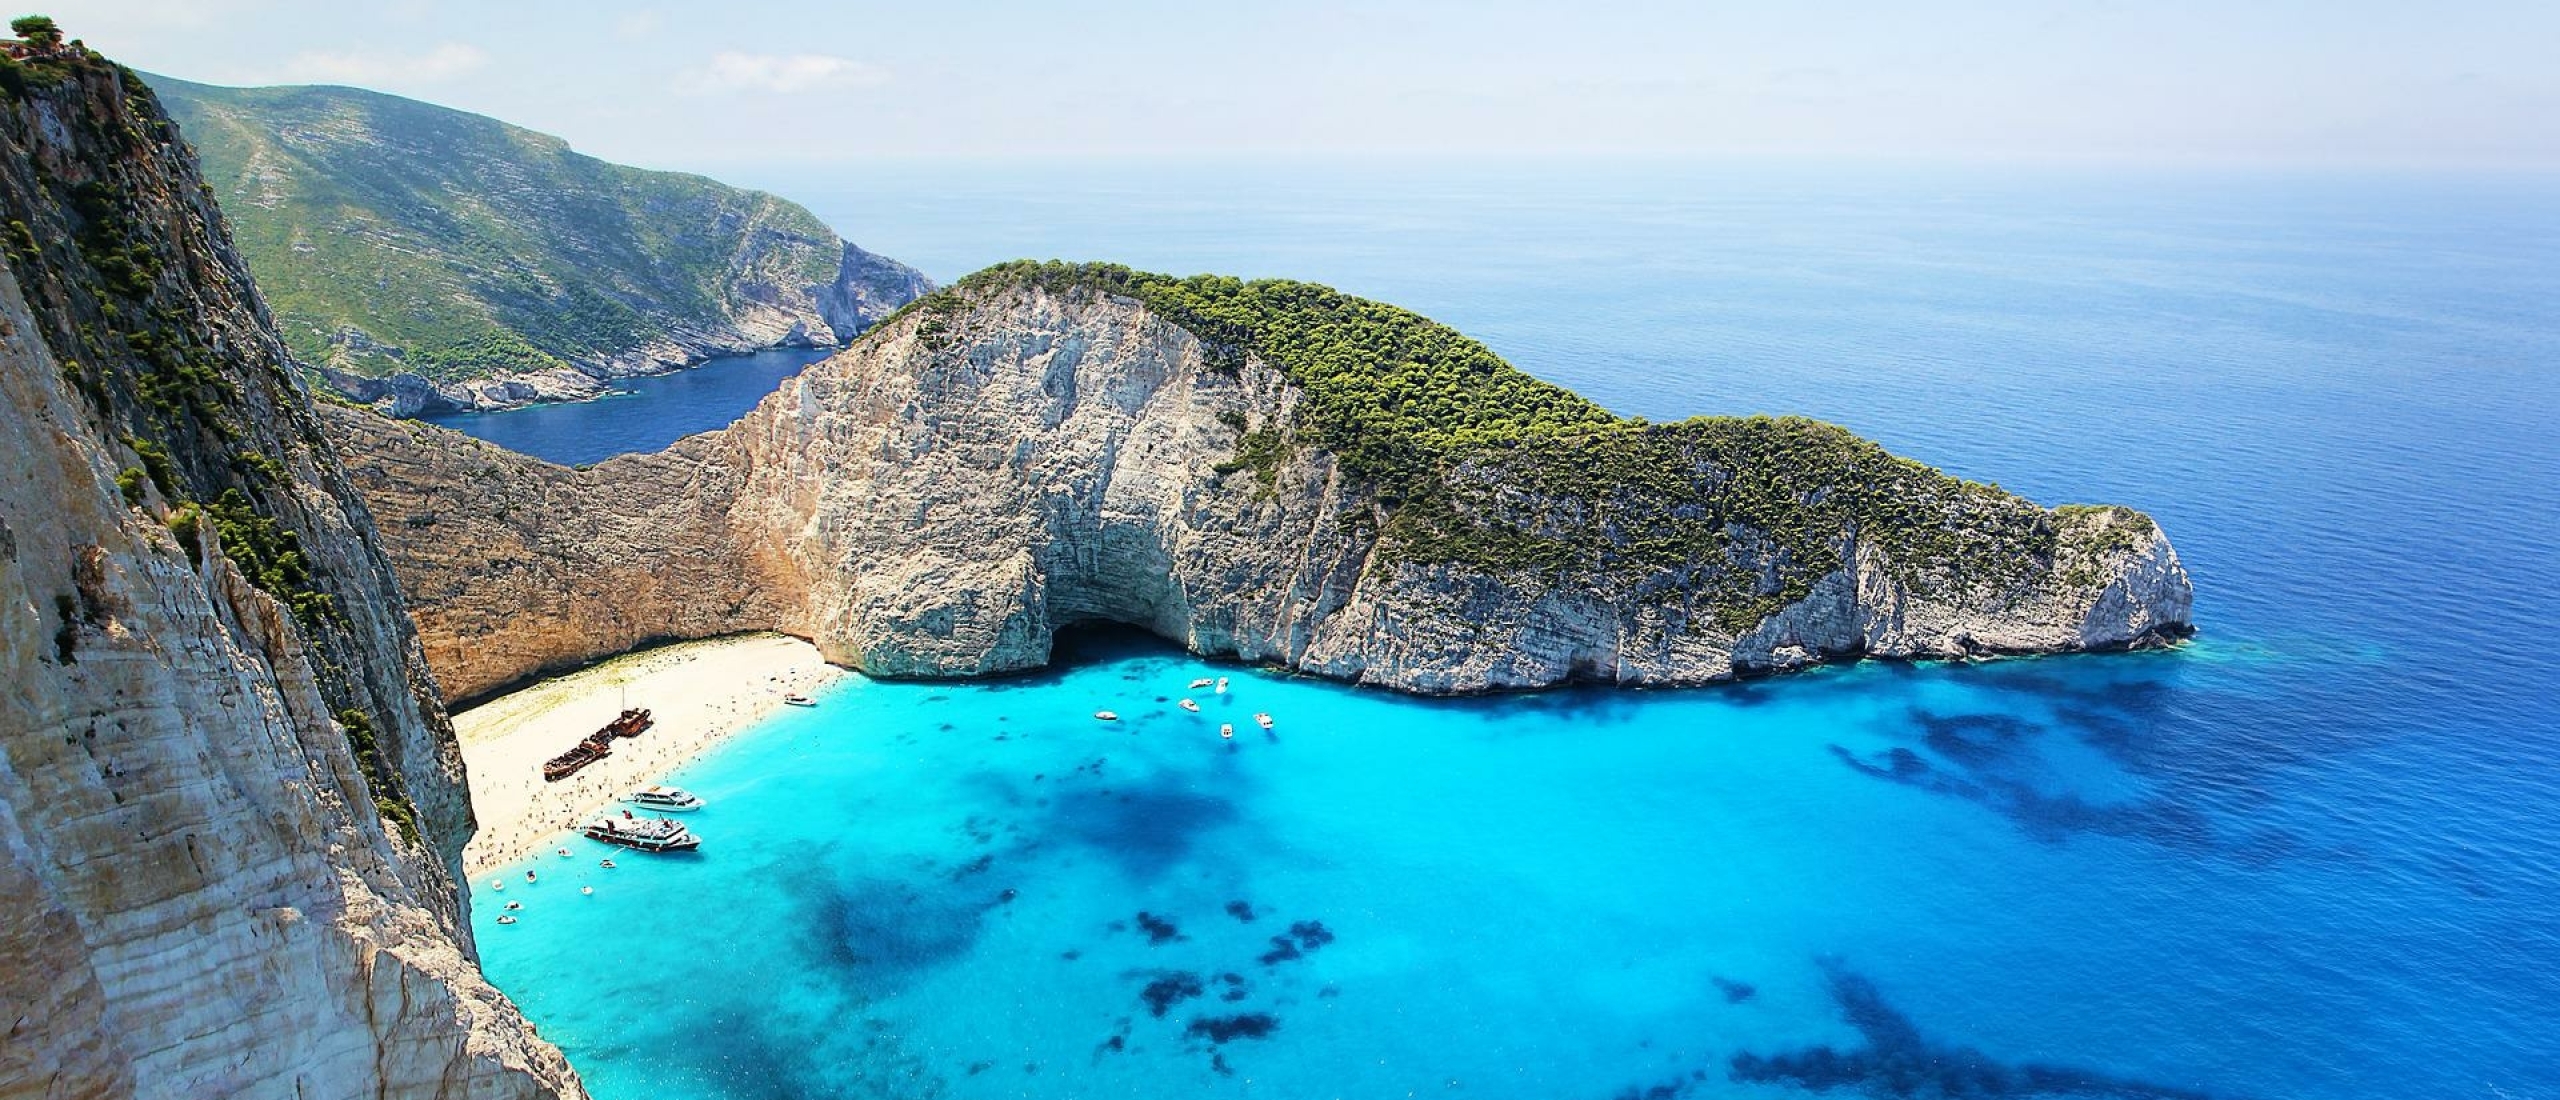 mooiste-bezienswaardigheden-griekse-eilanden-zakynthos